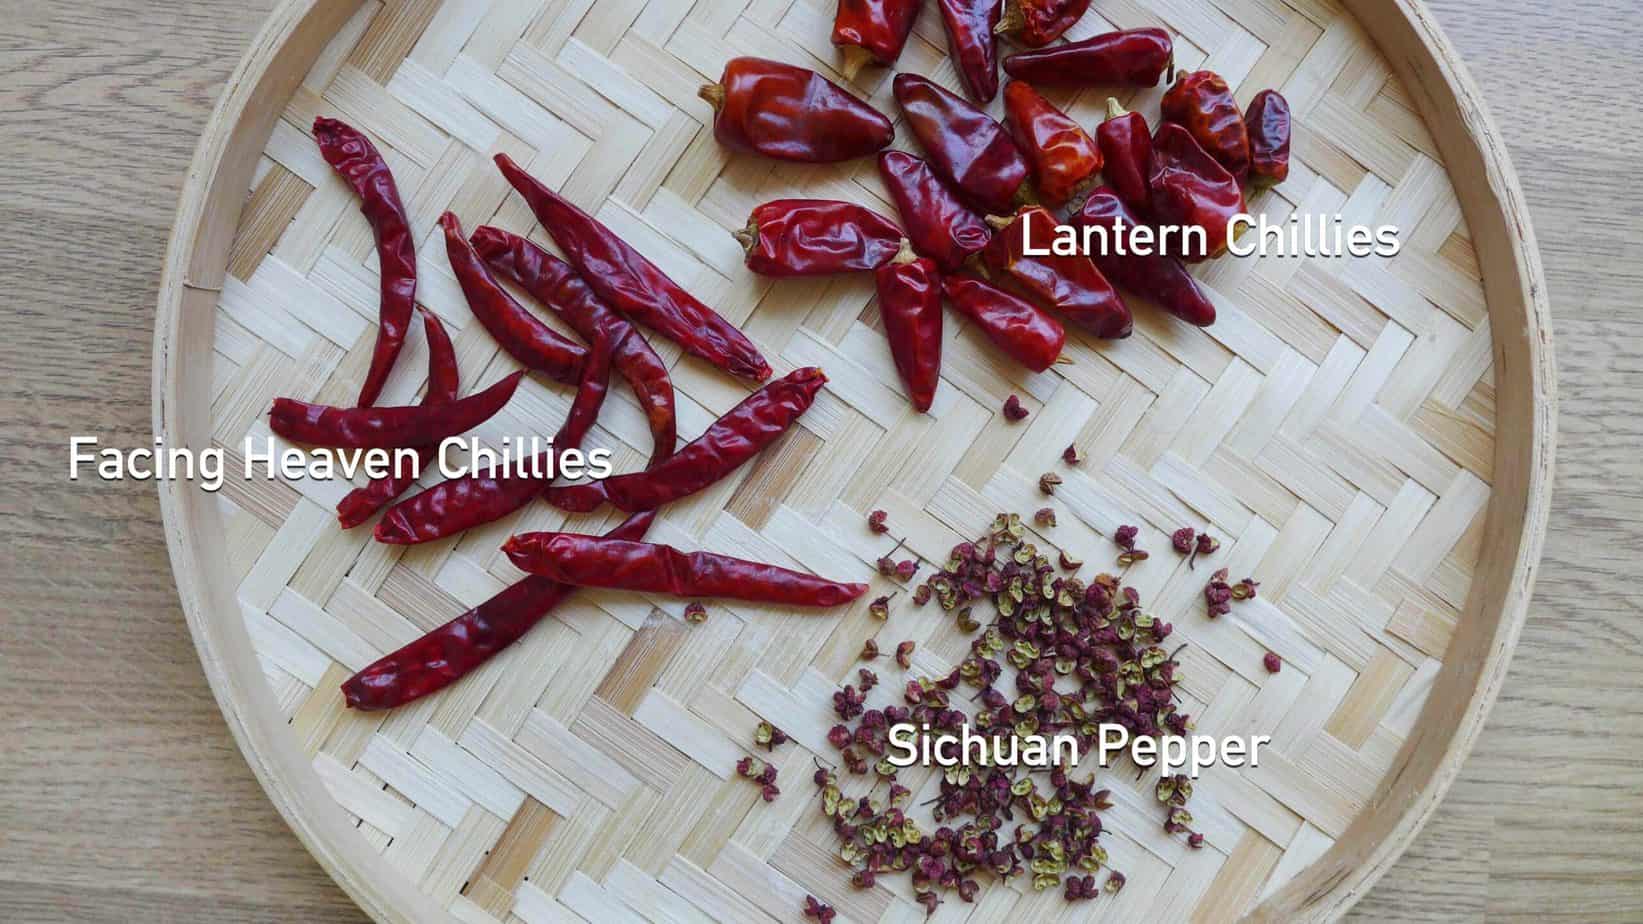 dried chillies & Sichuan pepper